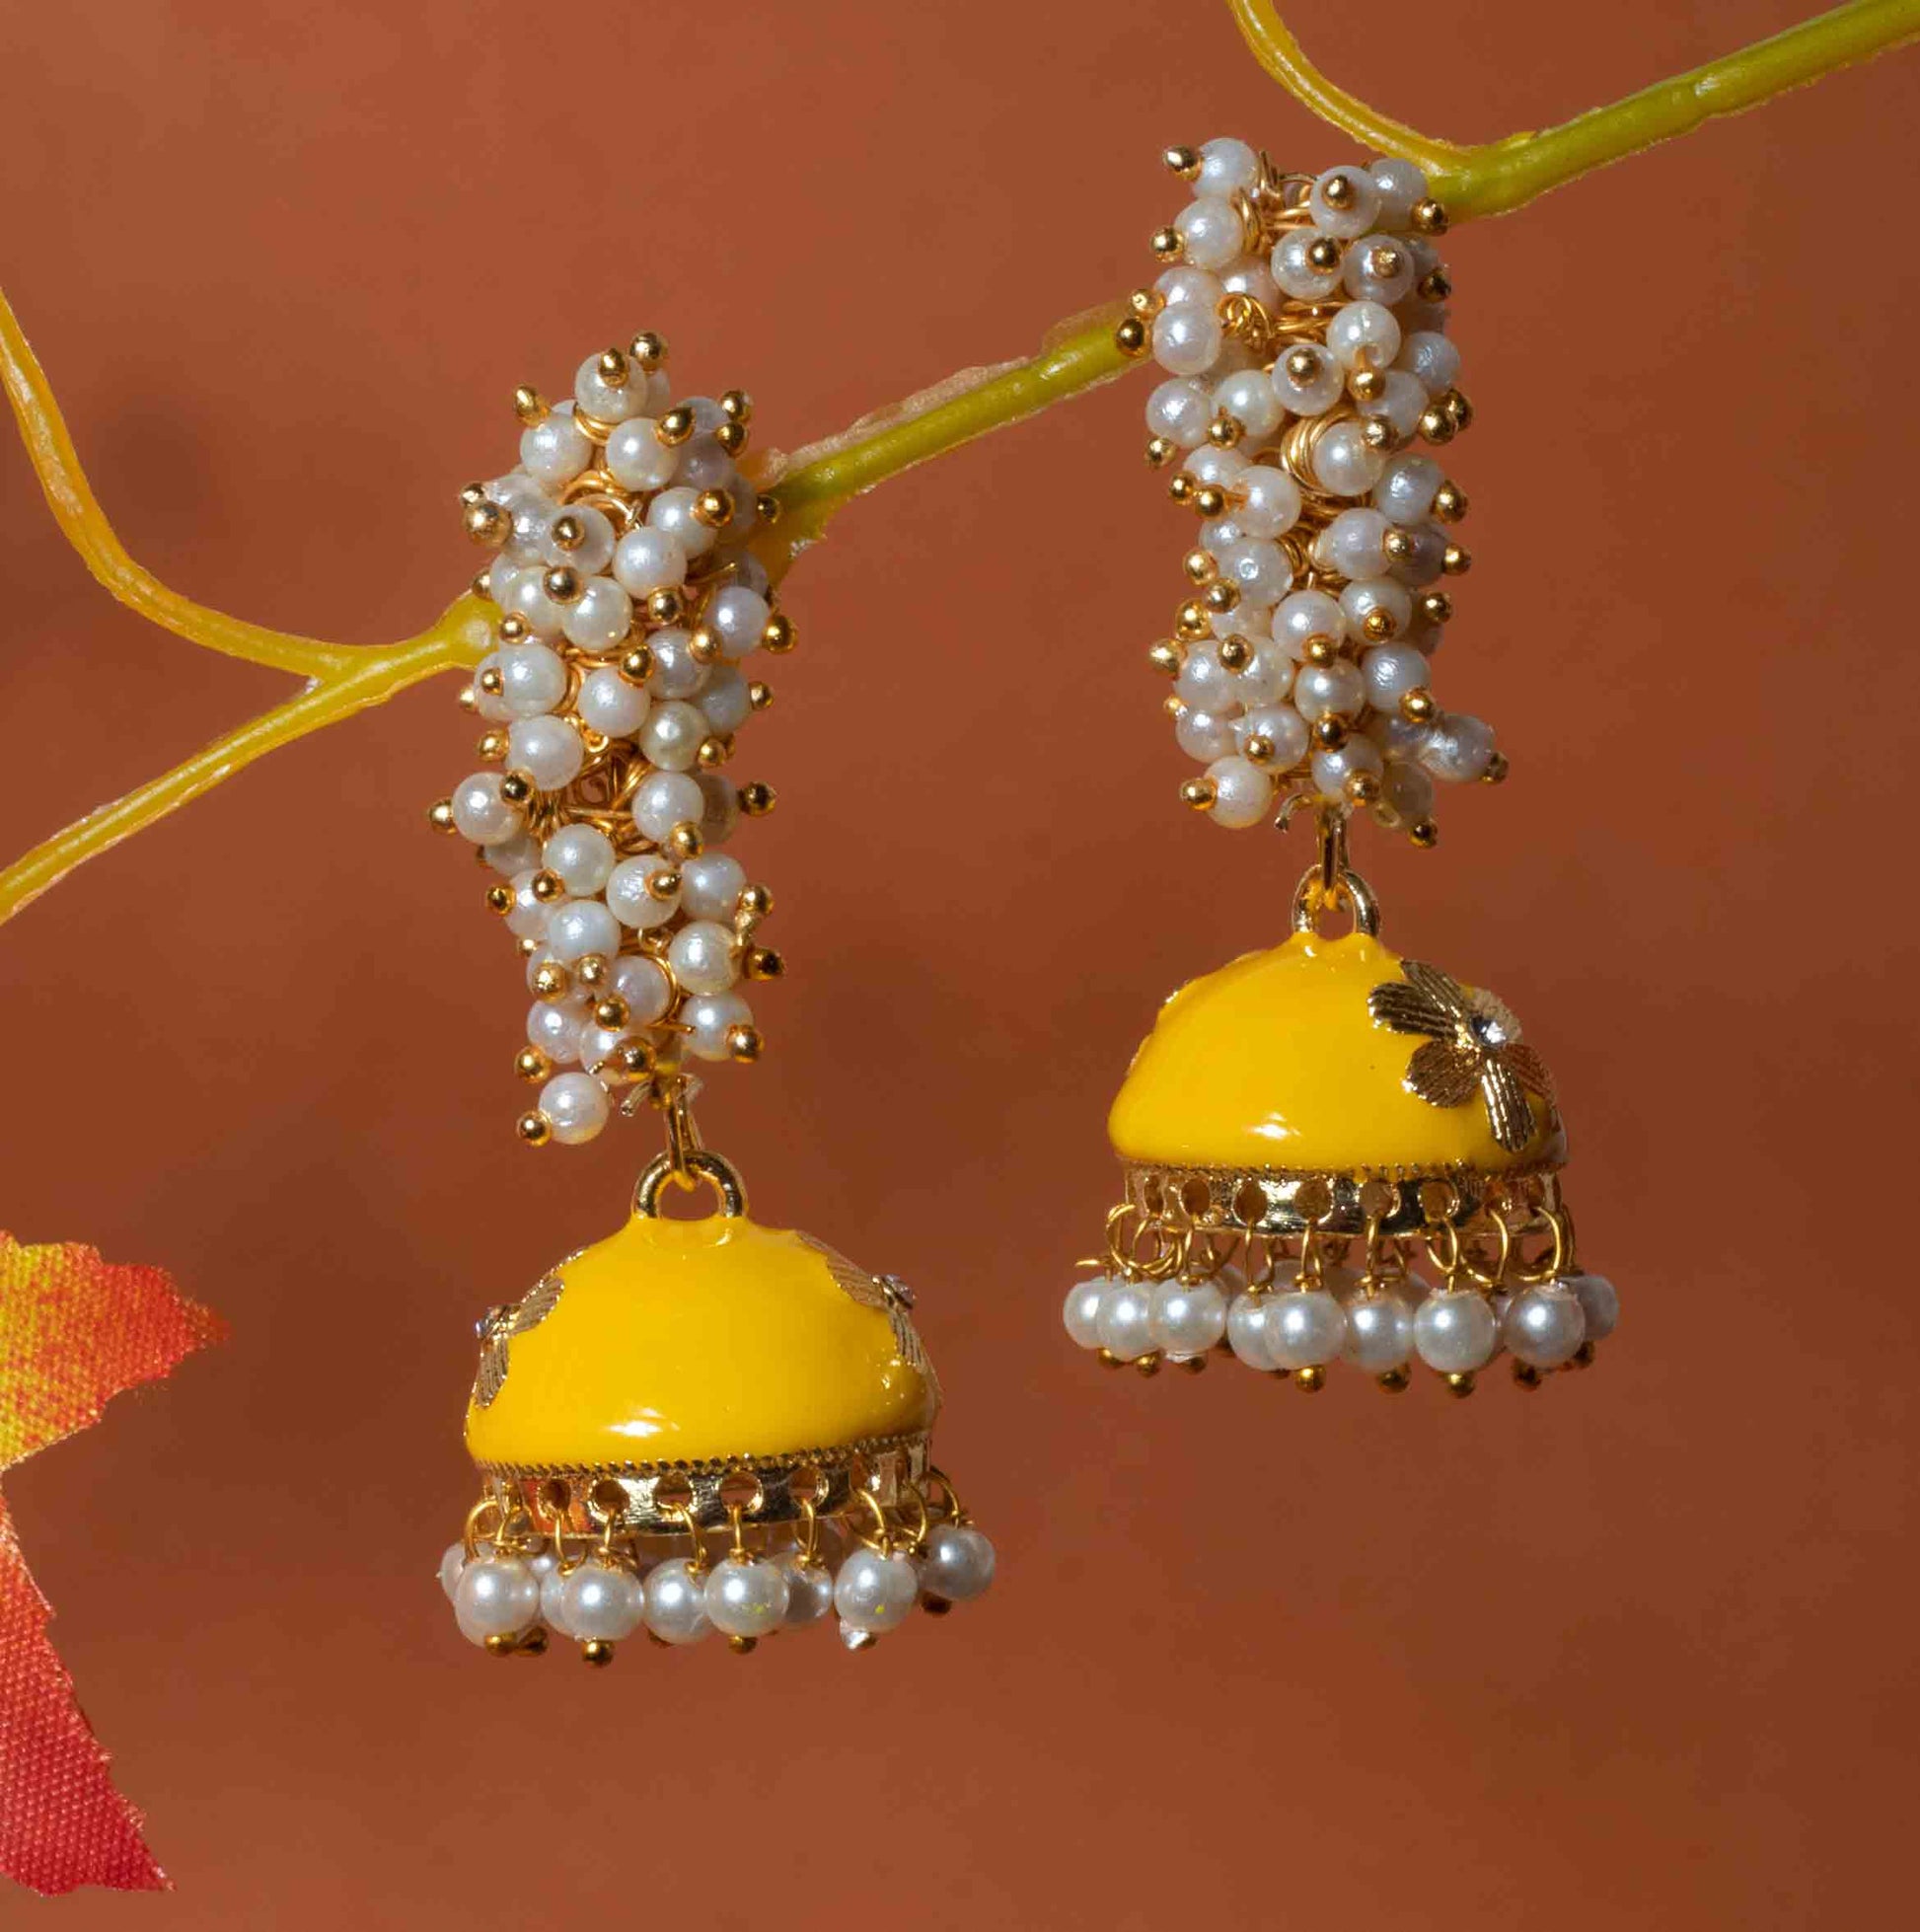 Moonstruck Gold Pearl Hoop Jhumki Fashion Earrings For Women (Yellow) - www.MoonstruckINC.com